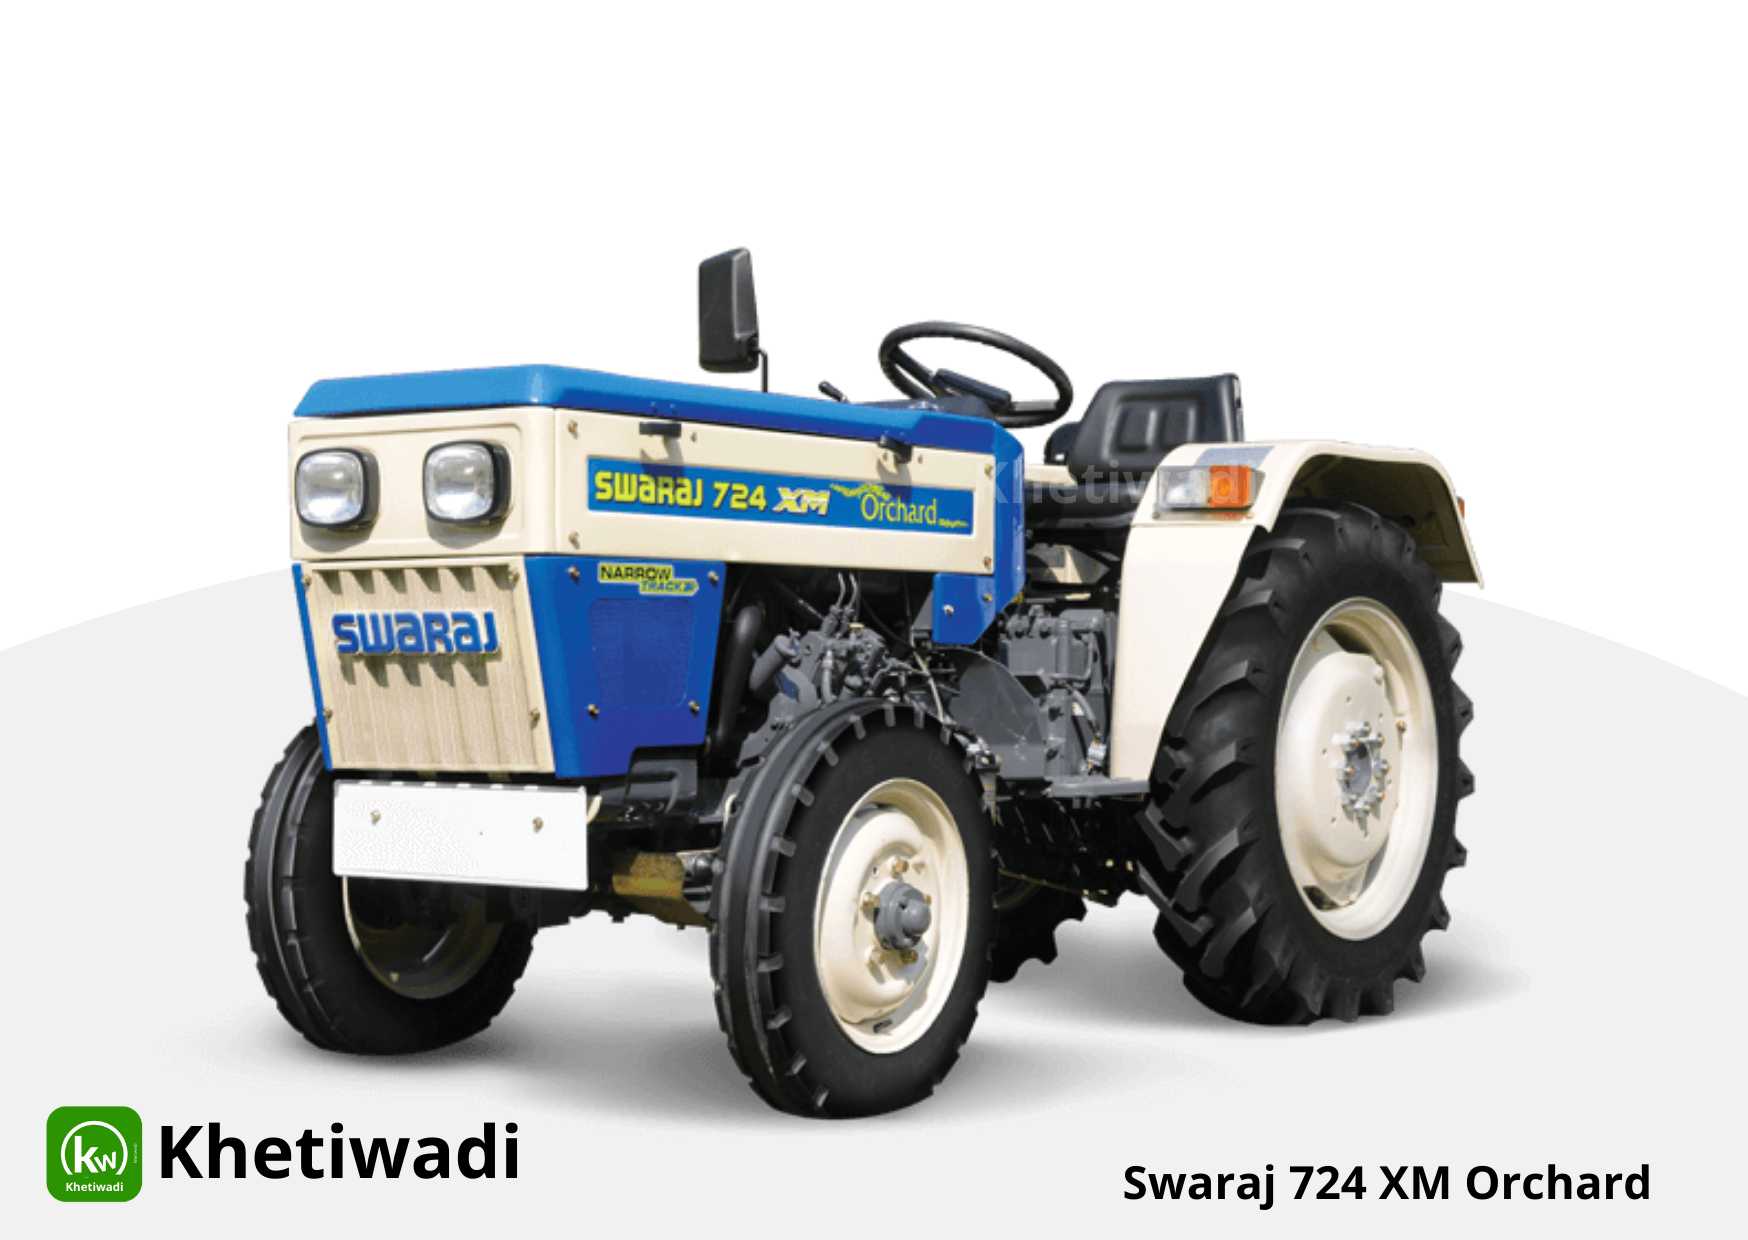 Swaraj 724 XM Orchard full detail